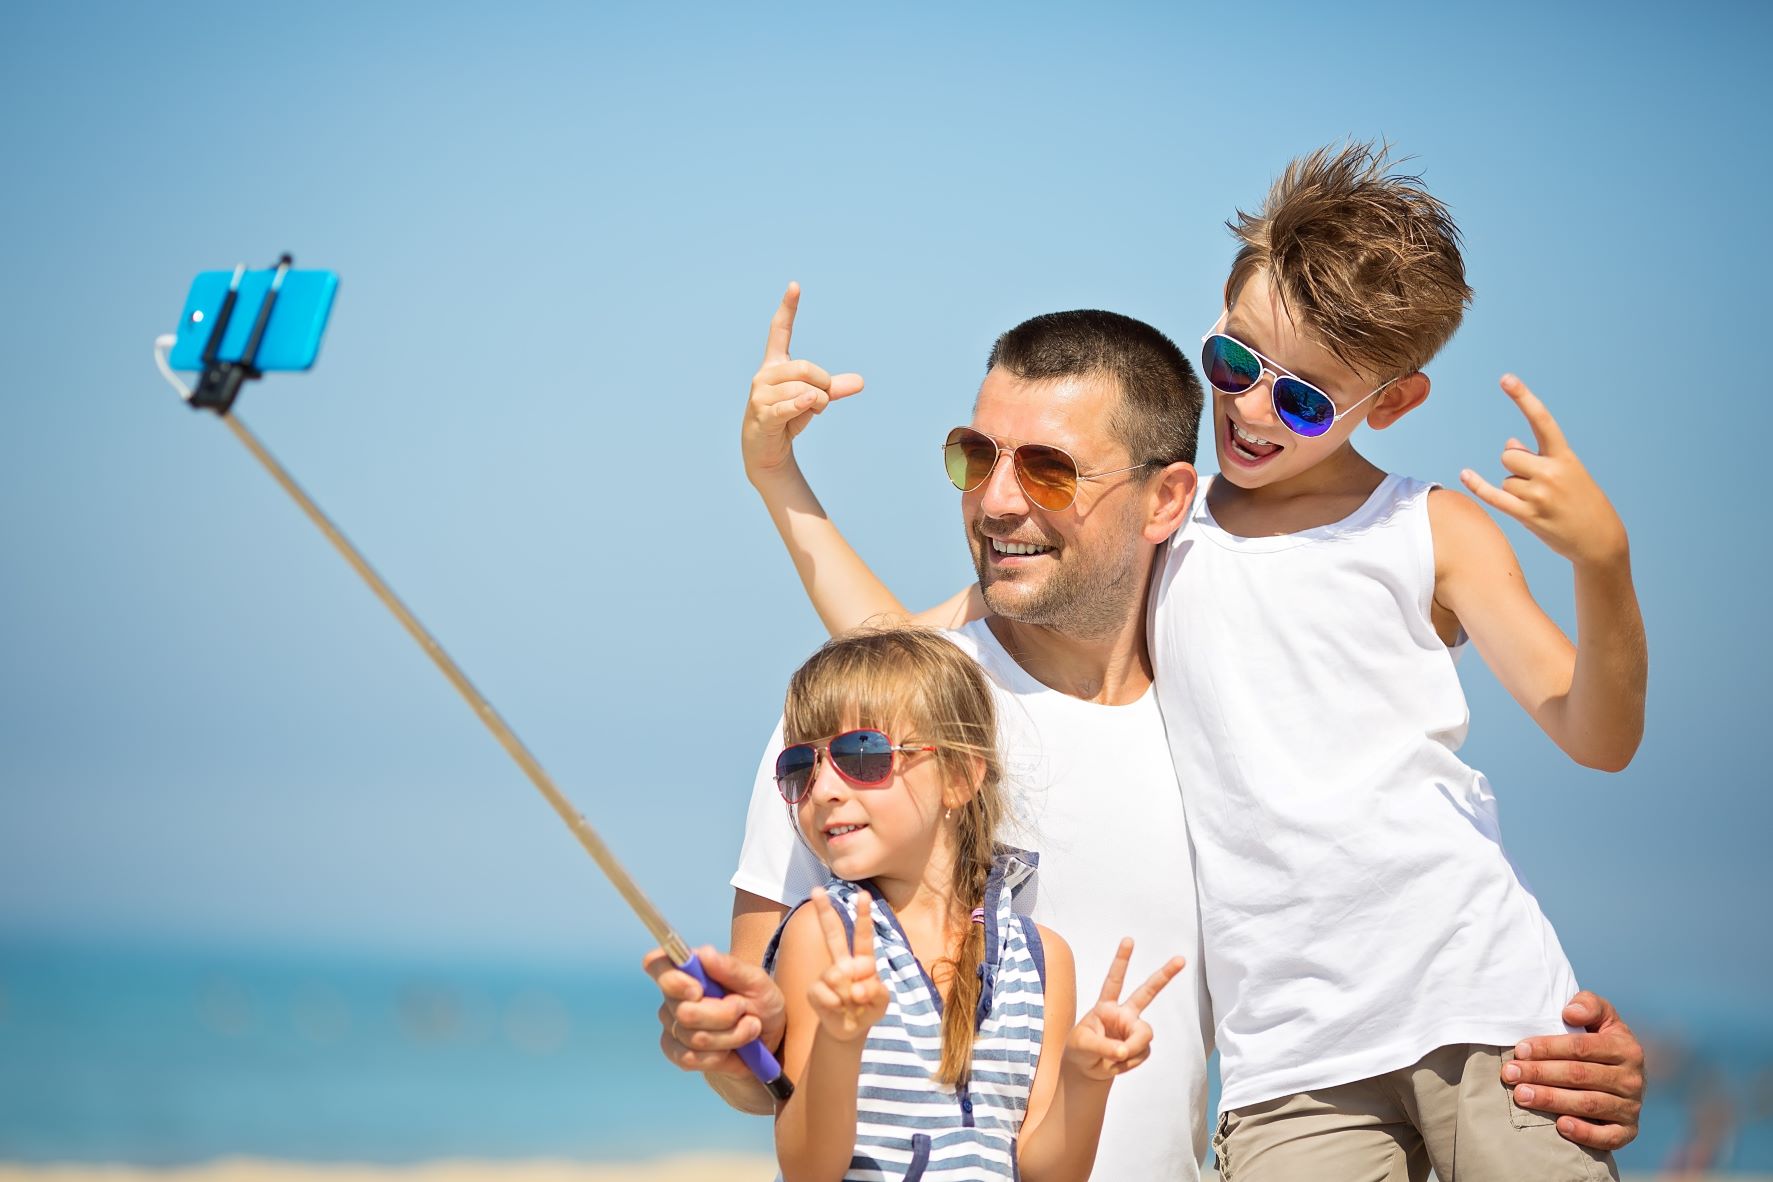 Dad & kids taking a summer fun selfie